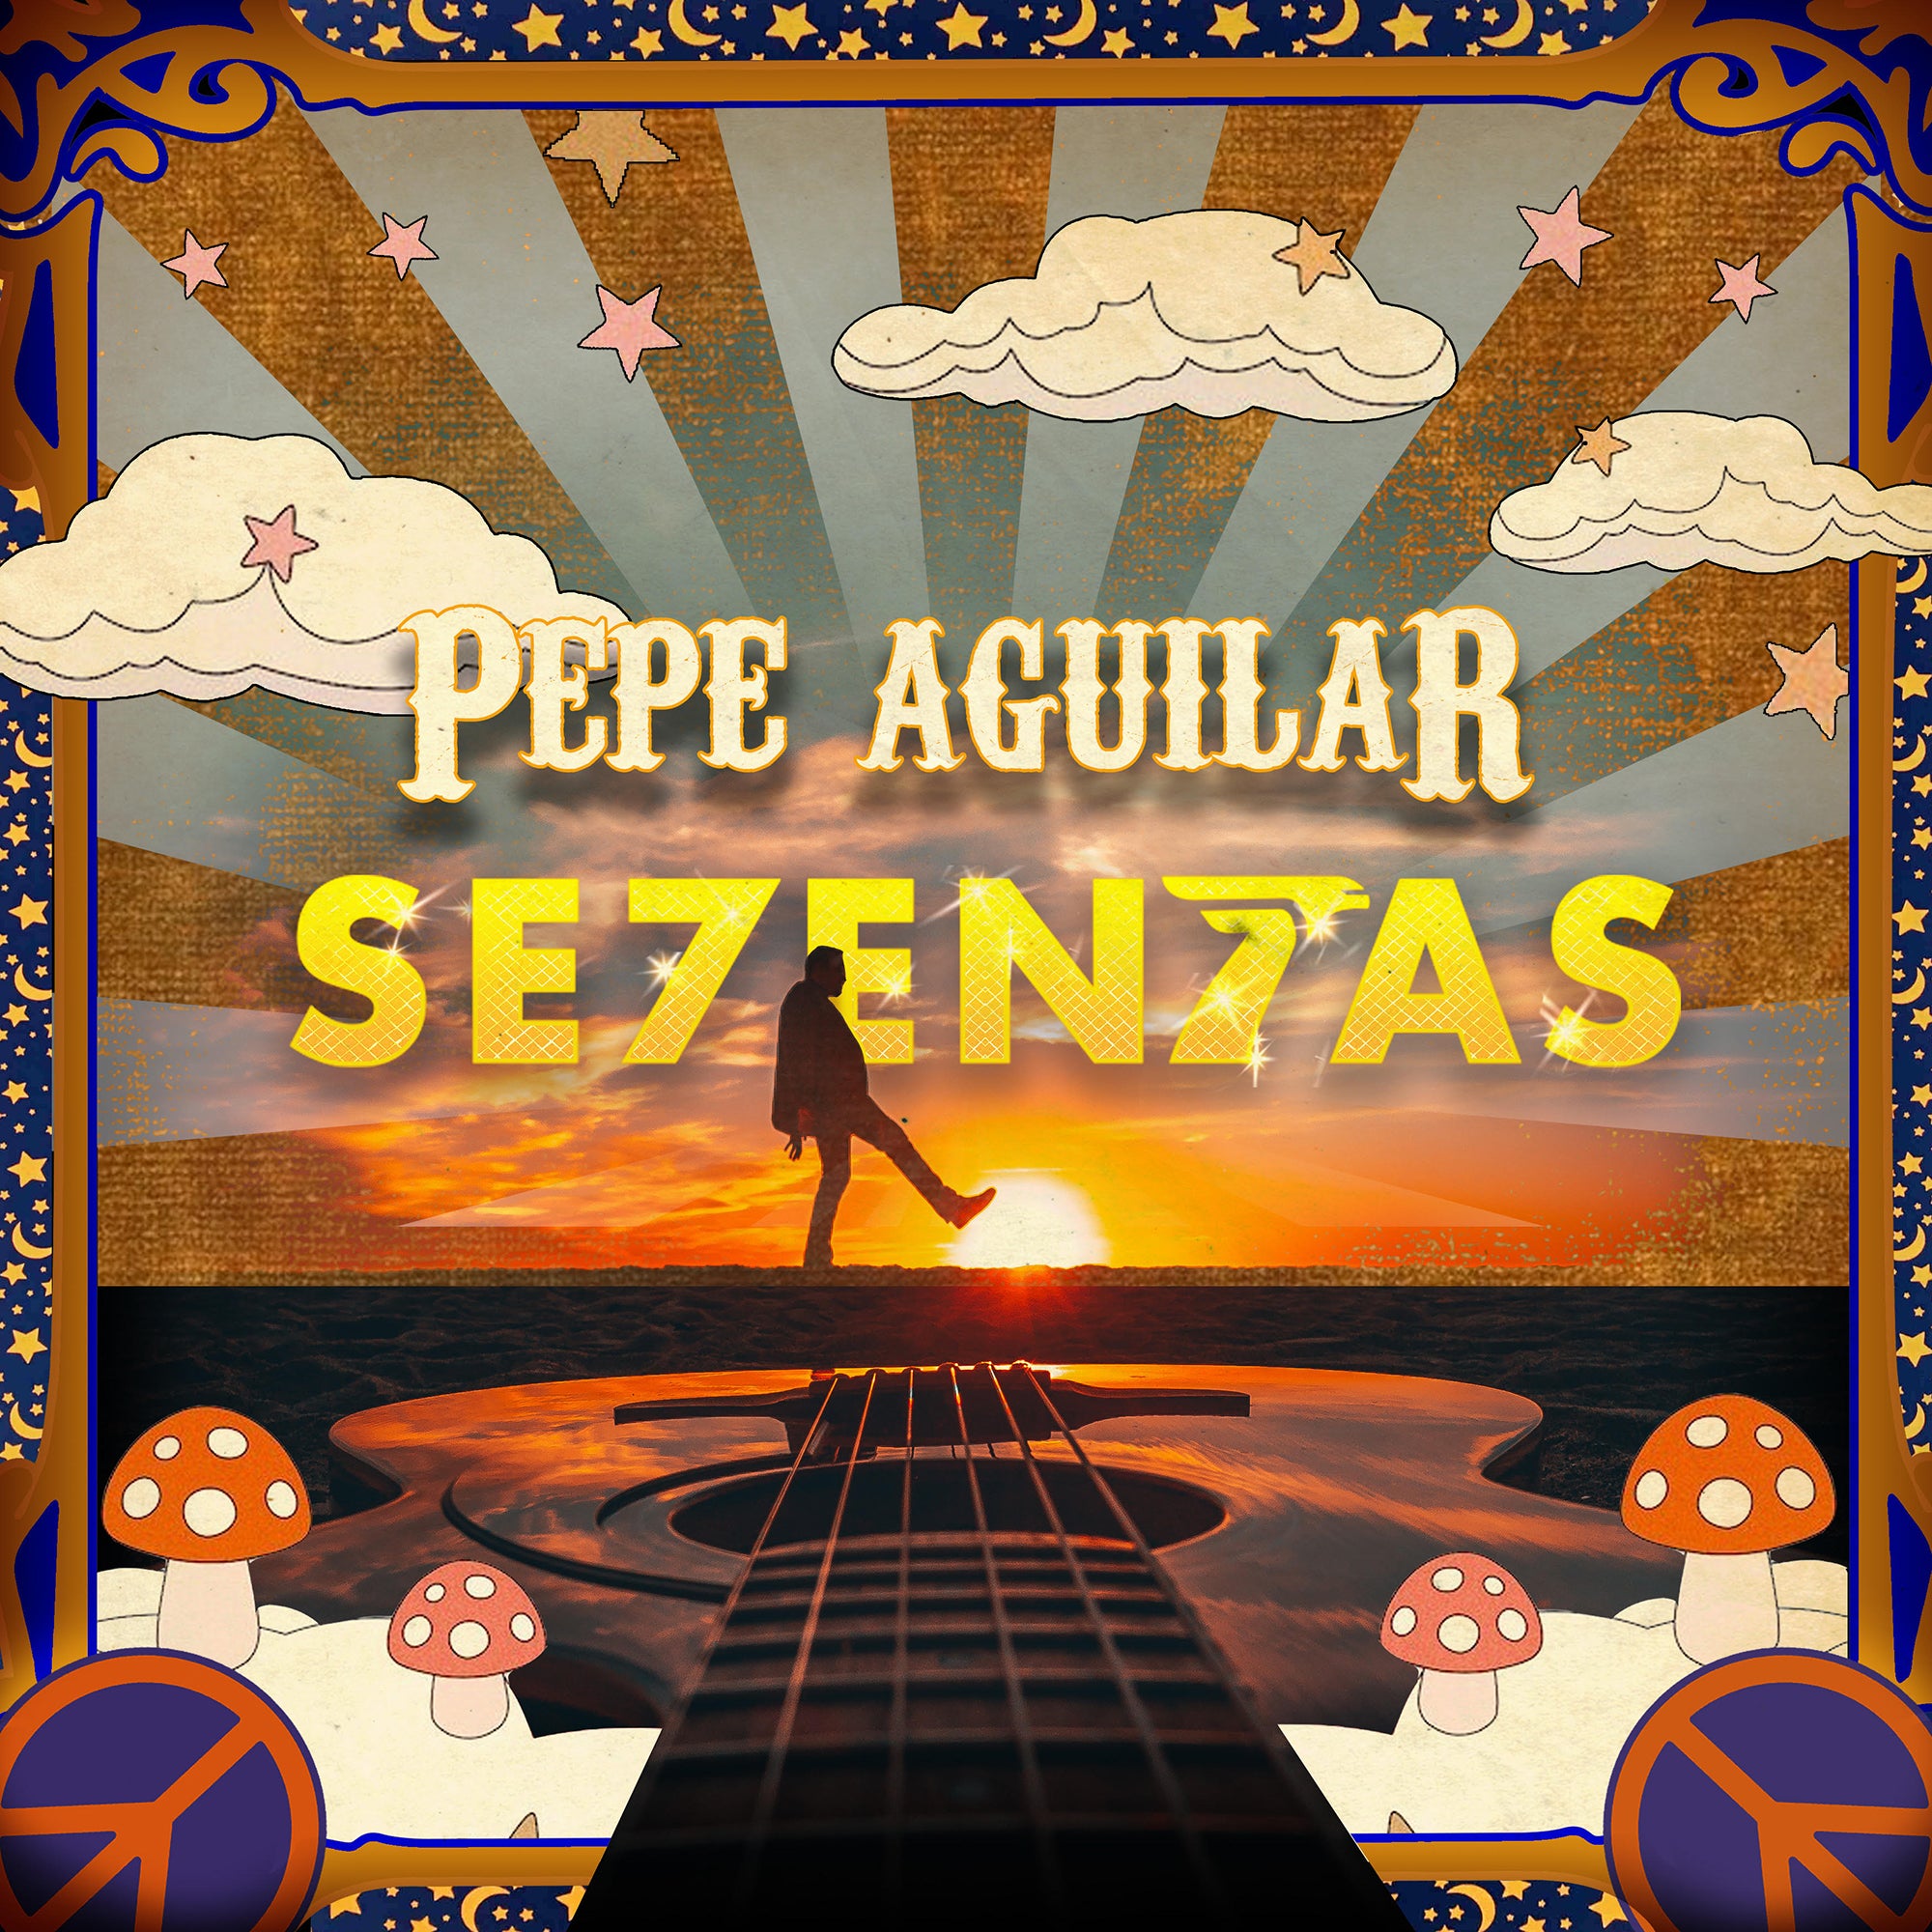 Pepe Aguilar - "Se7entas" Vinyl